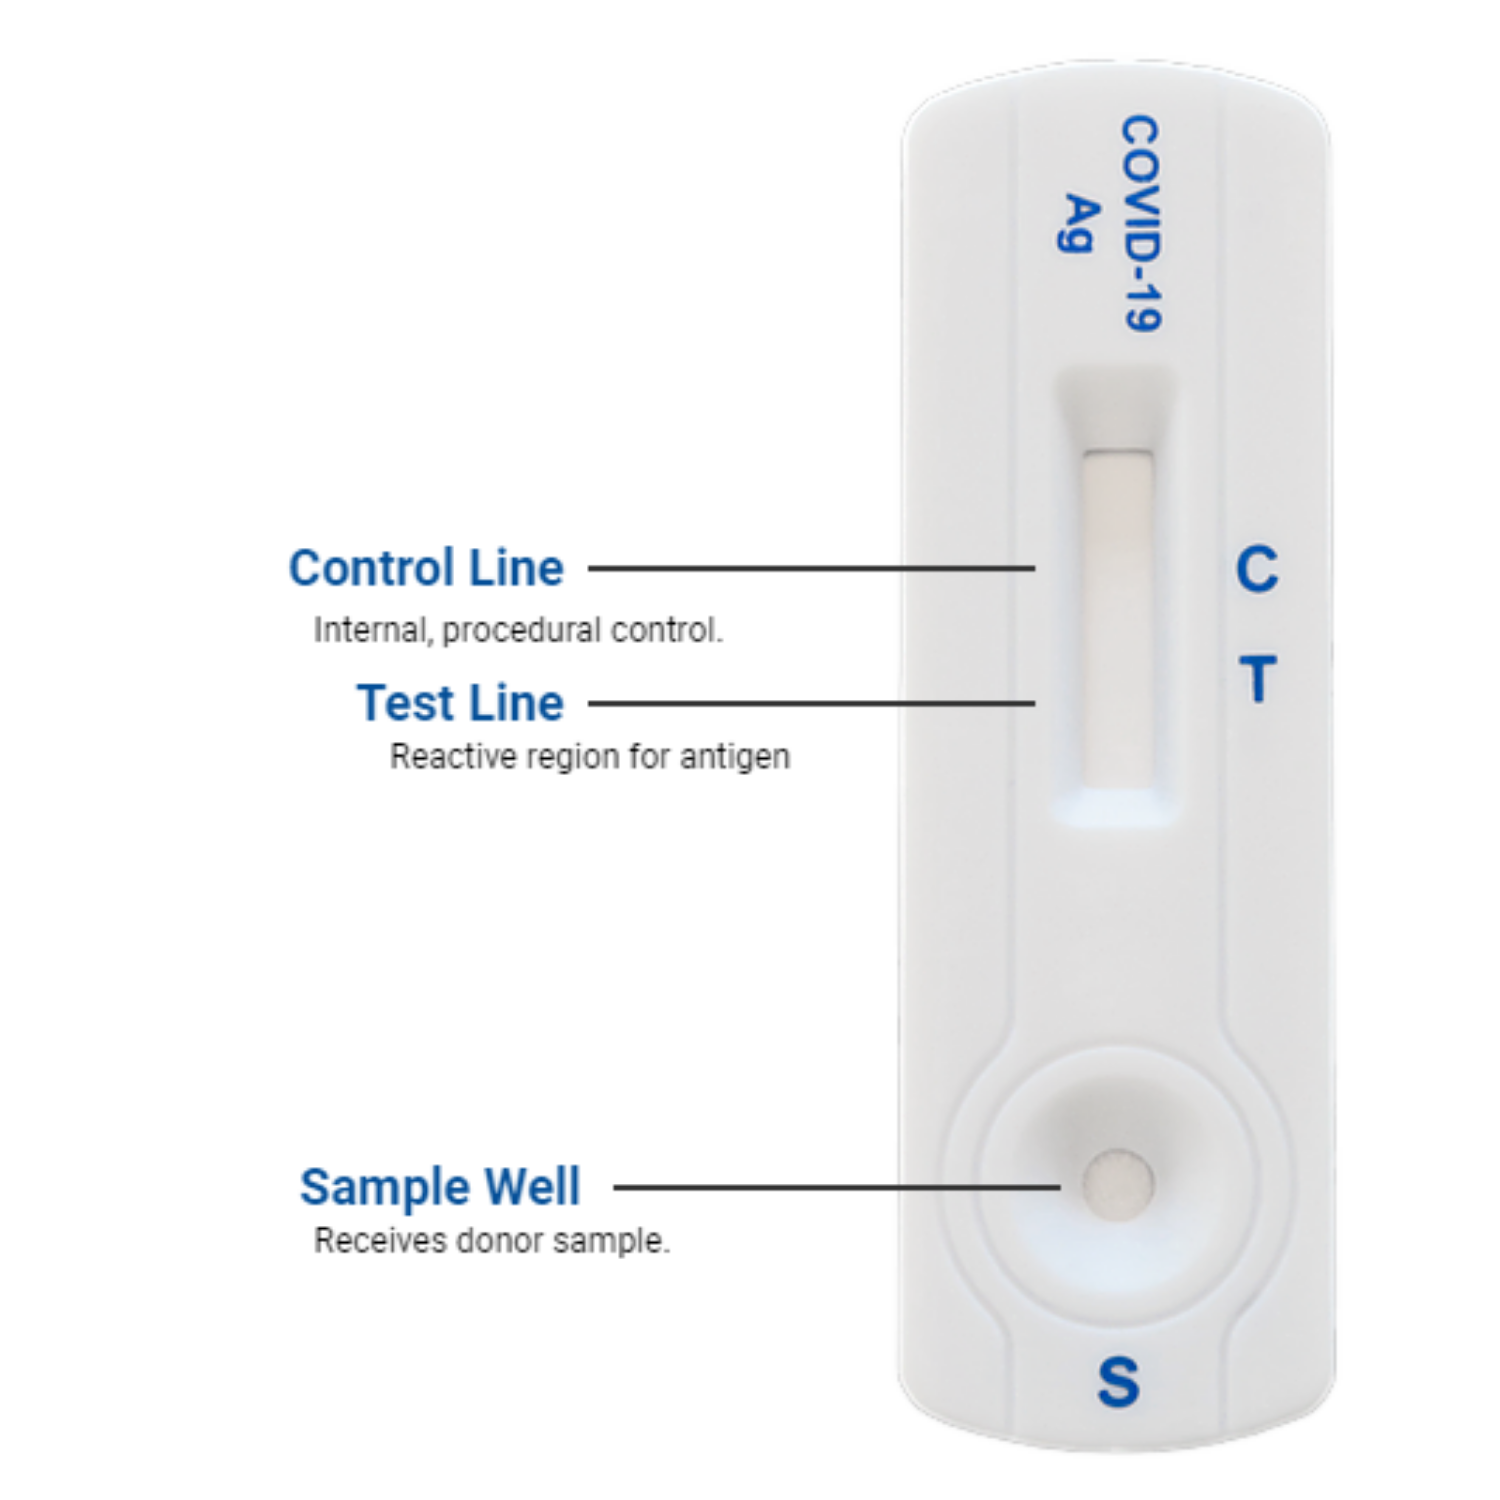 Rapid Antigen Covid-19 Test